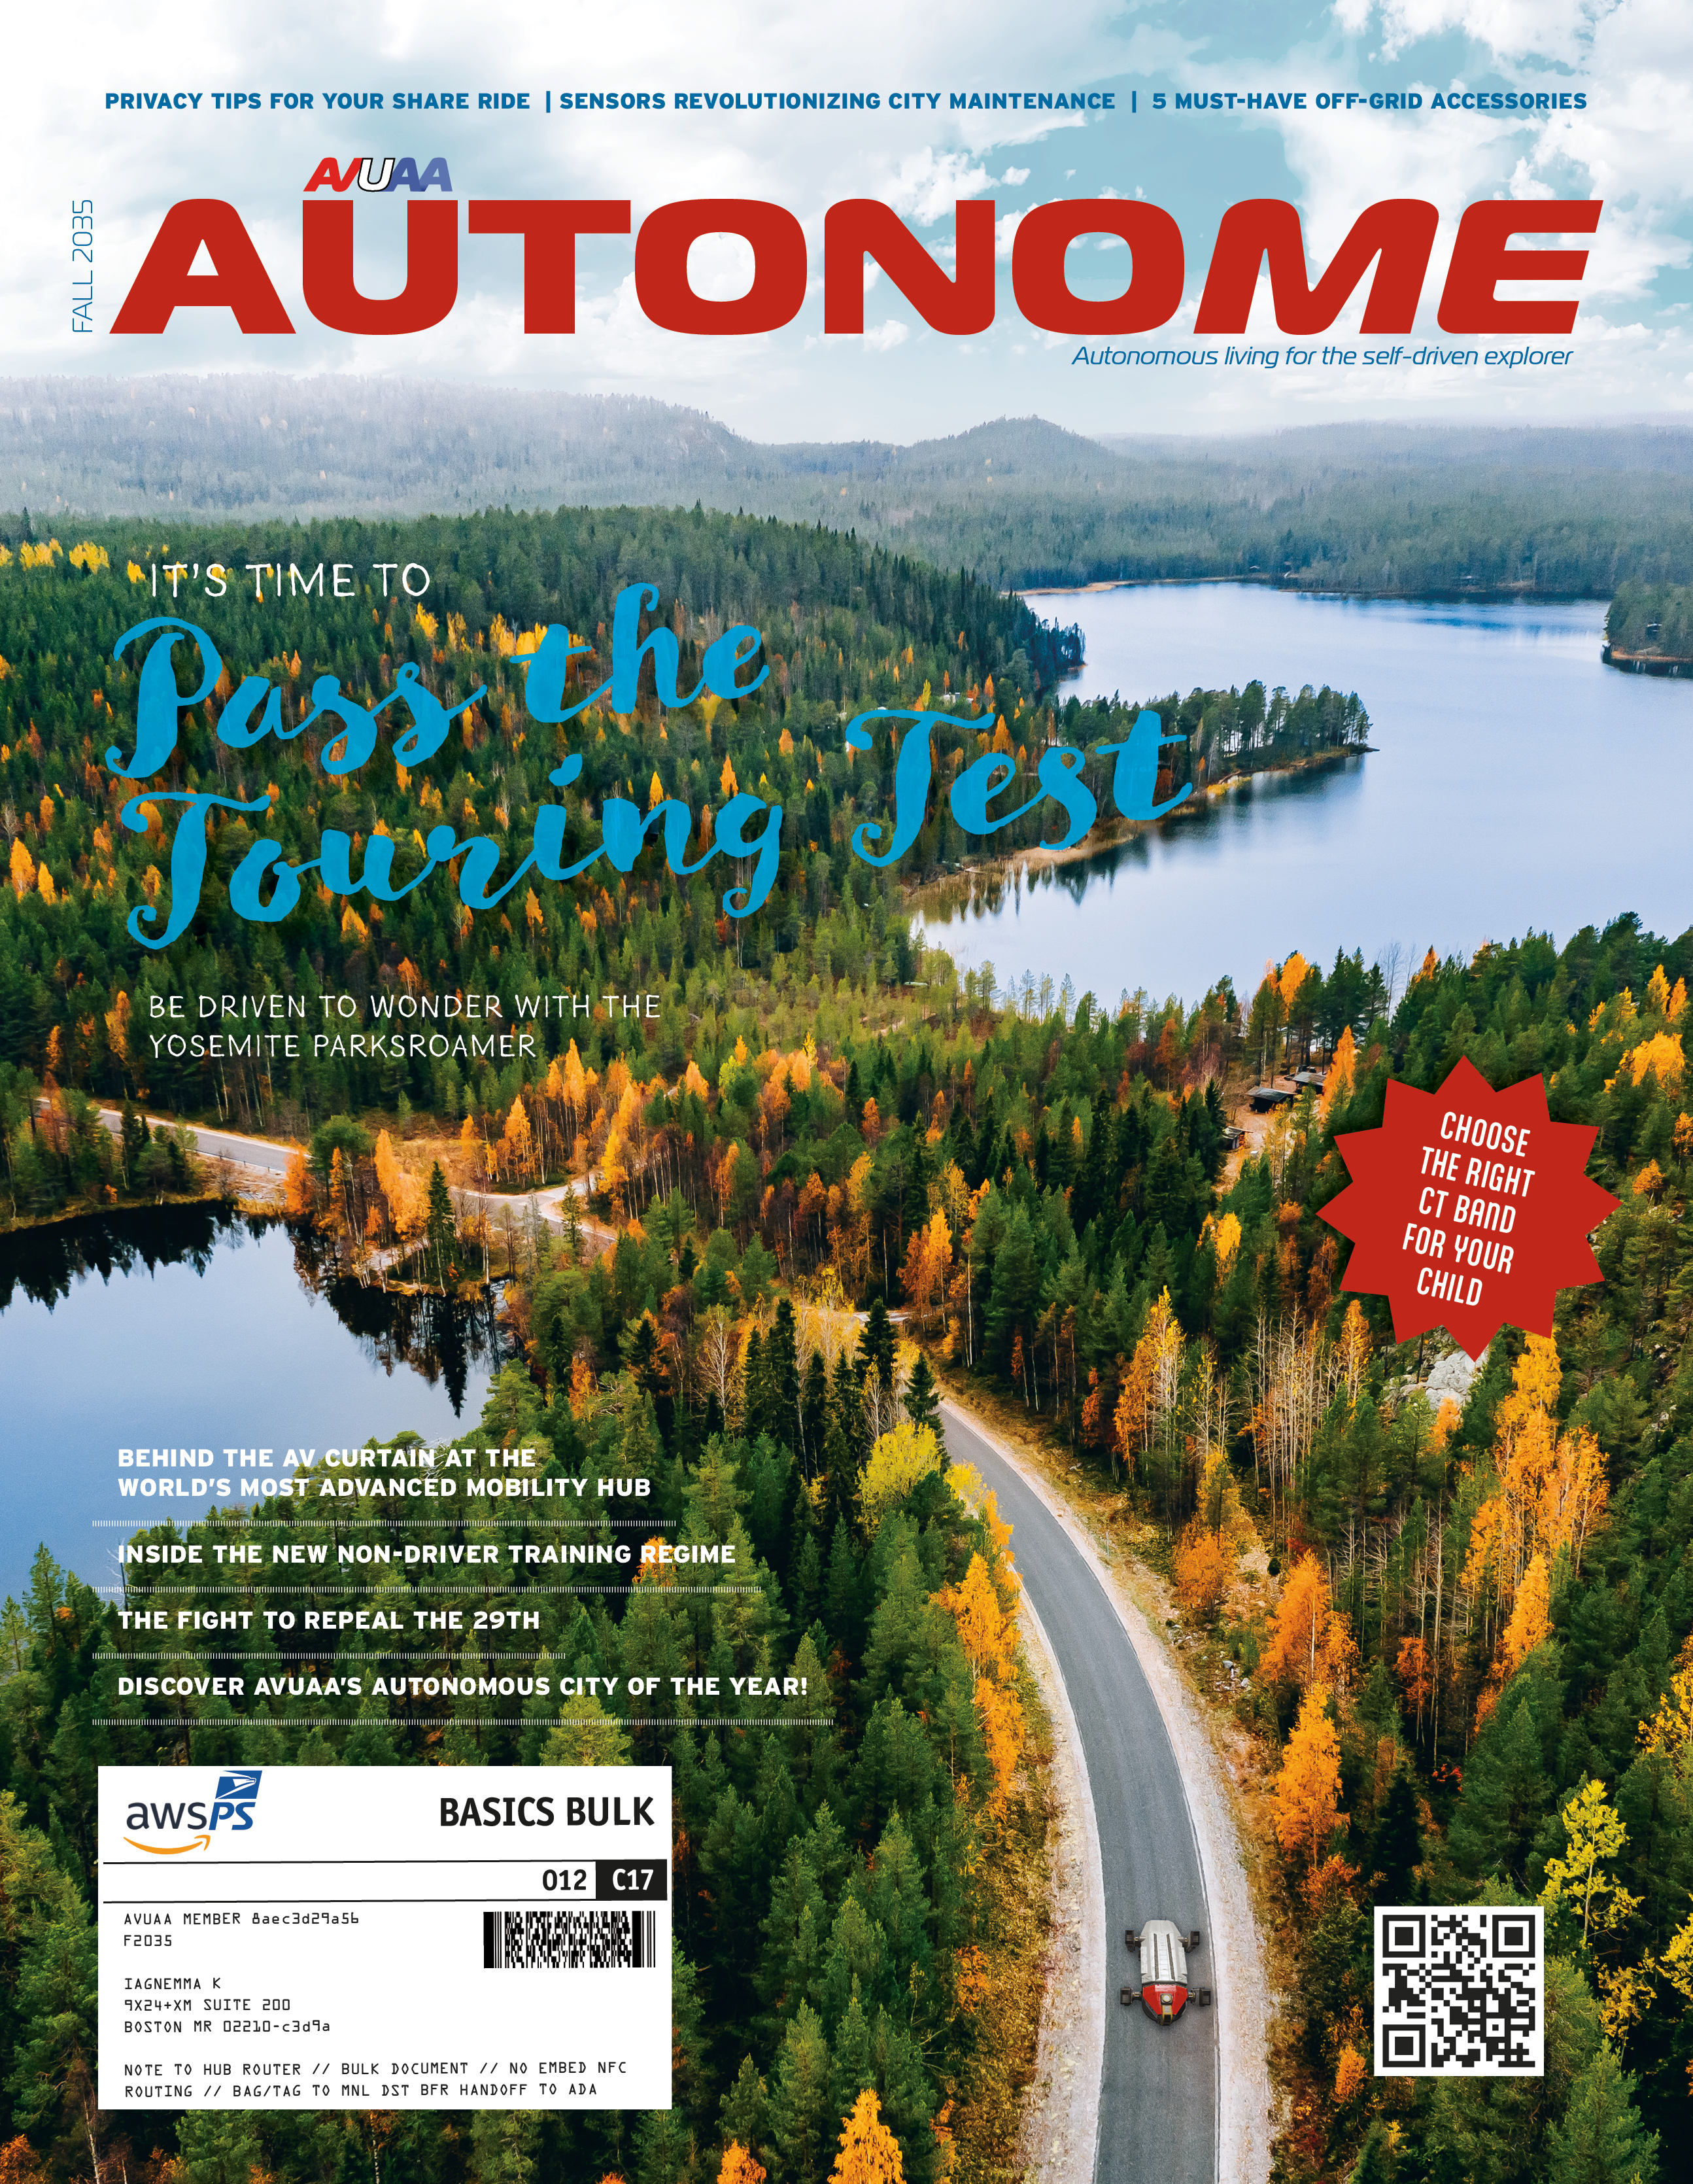 Spread from the Near Future Laboratory's magazine from a possible autonomous vehicle future